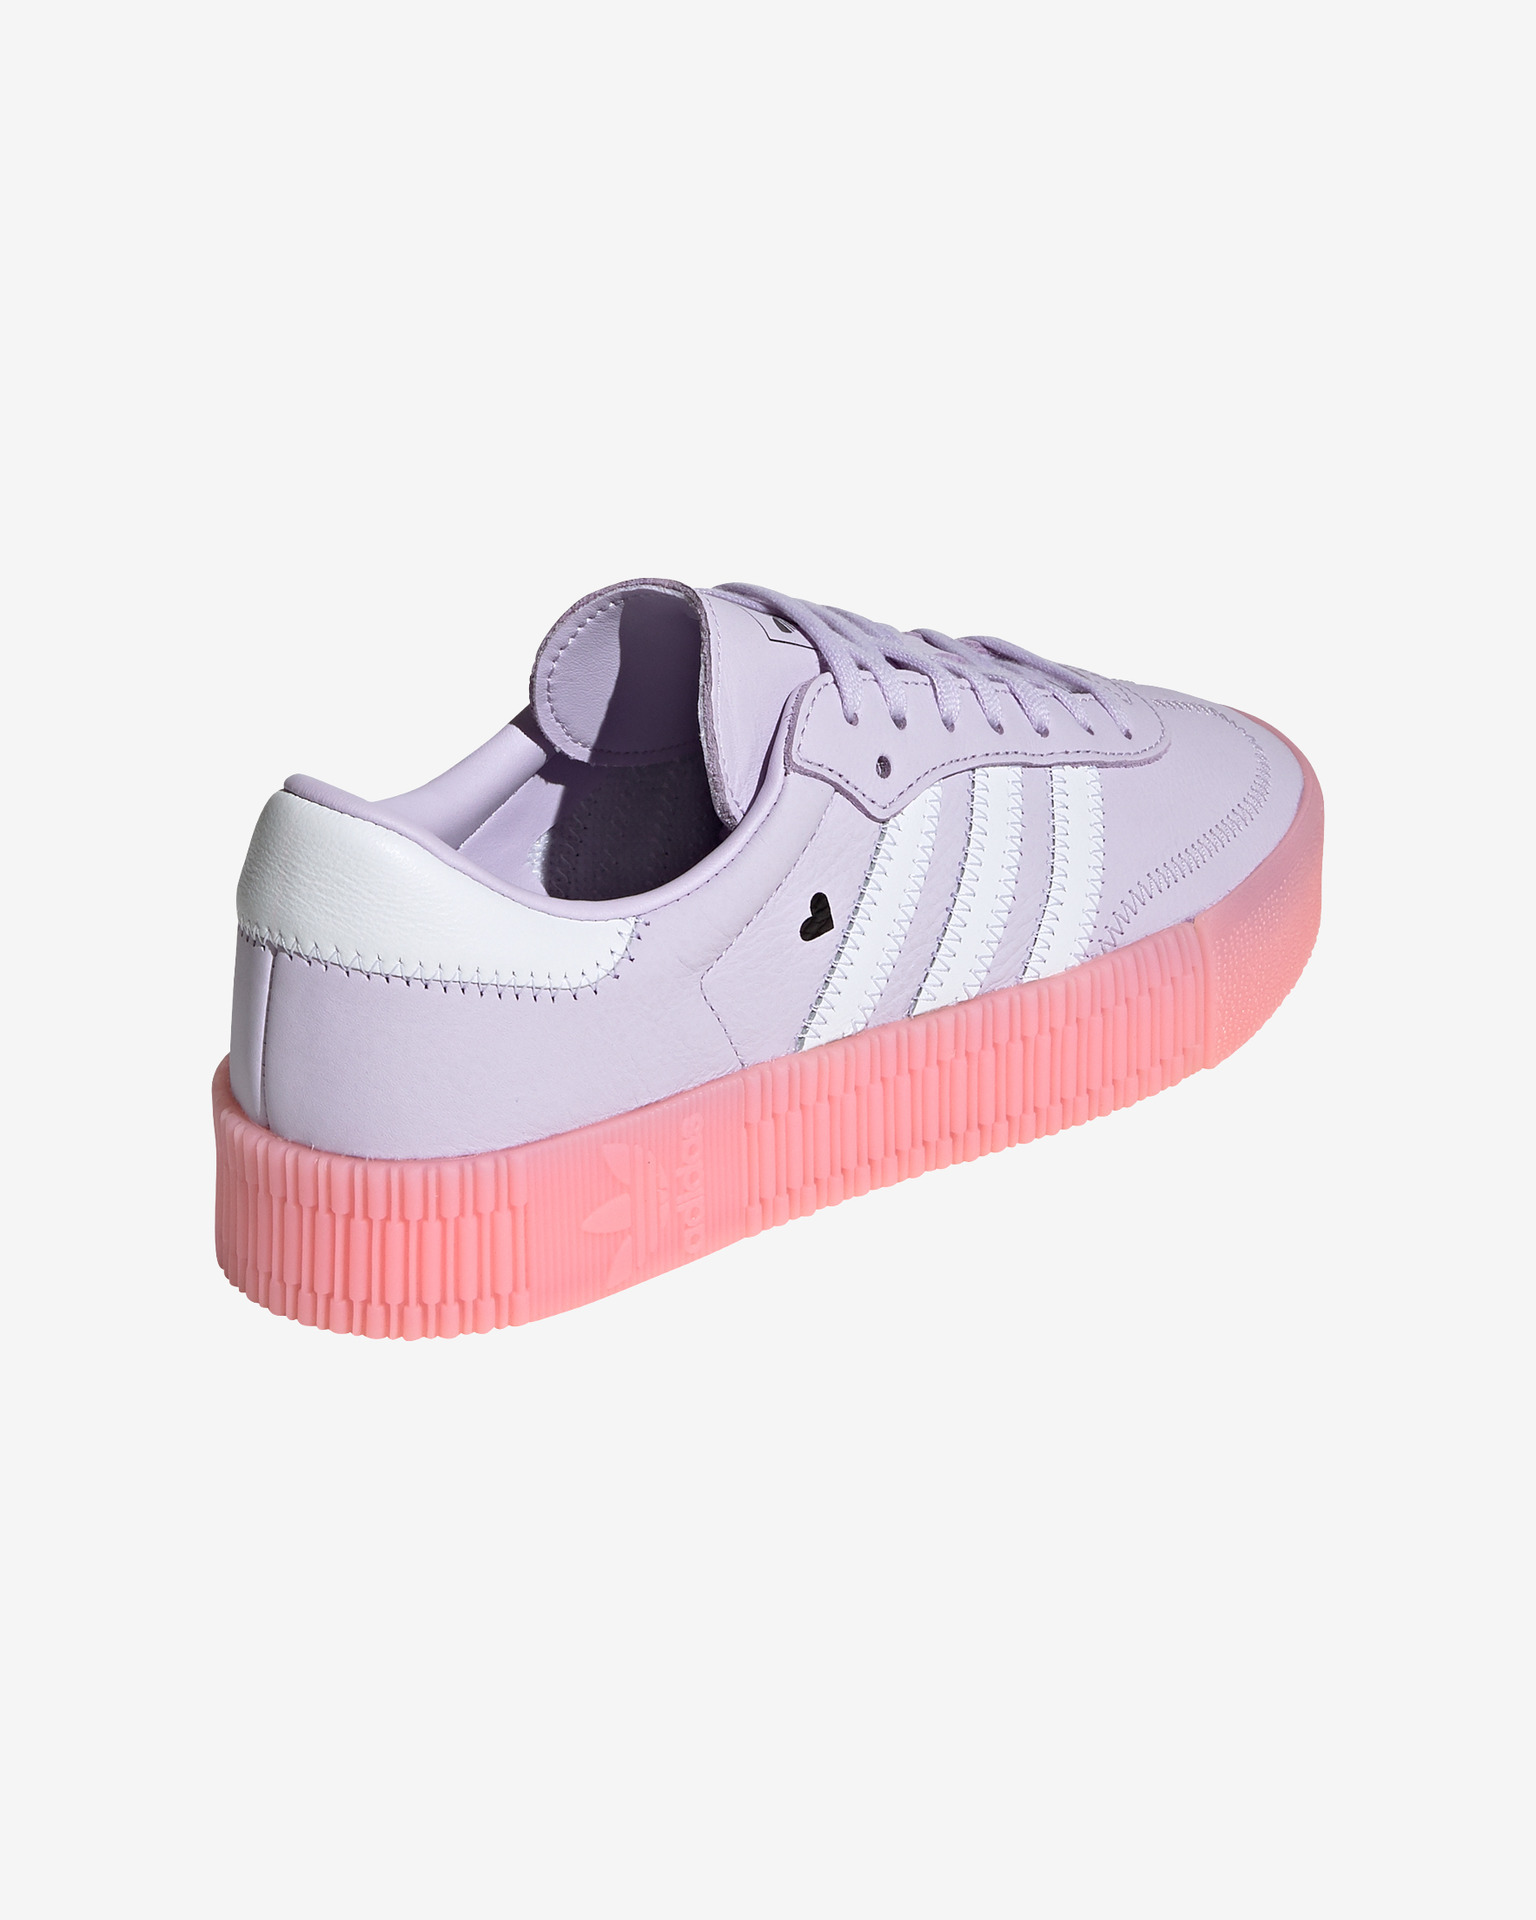 Women's shoes adidas Sambarose W Ftw White/ Core Black/ Glow Pink | Footshop